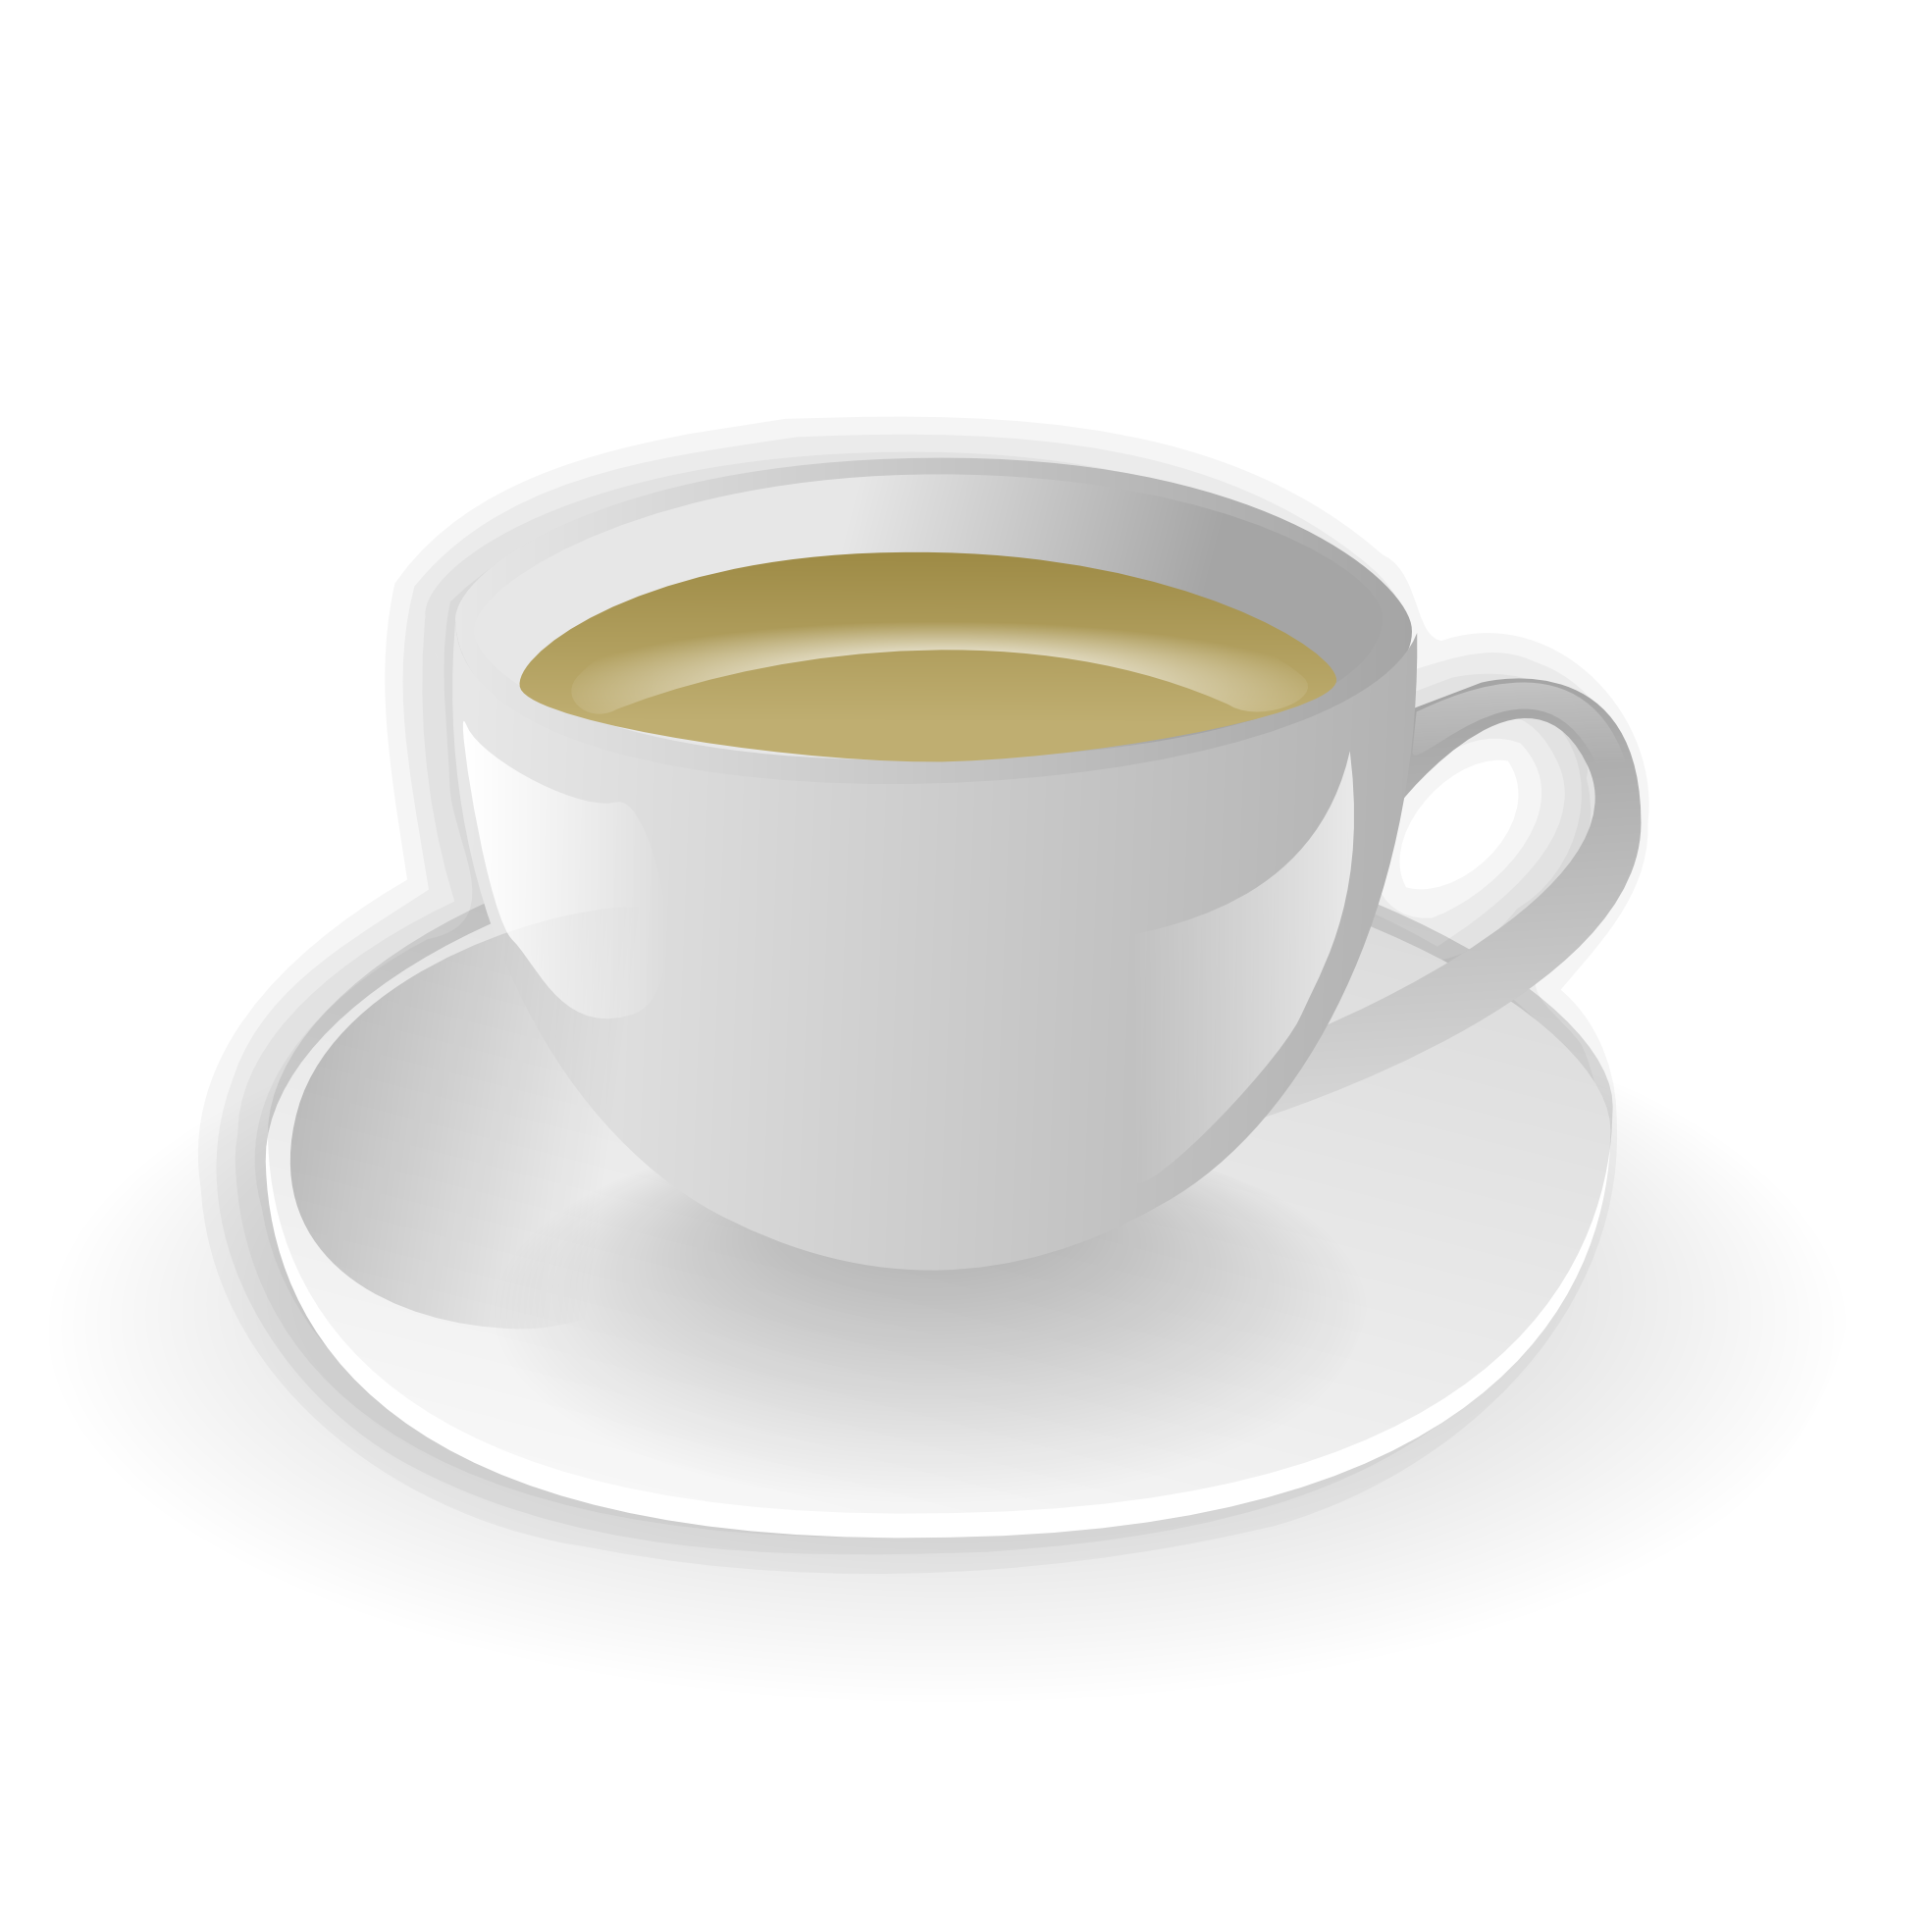 Coffee Cup Mug Putes Dynu Hd Image Clipart